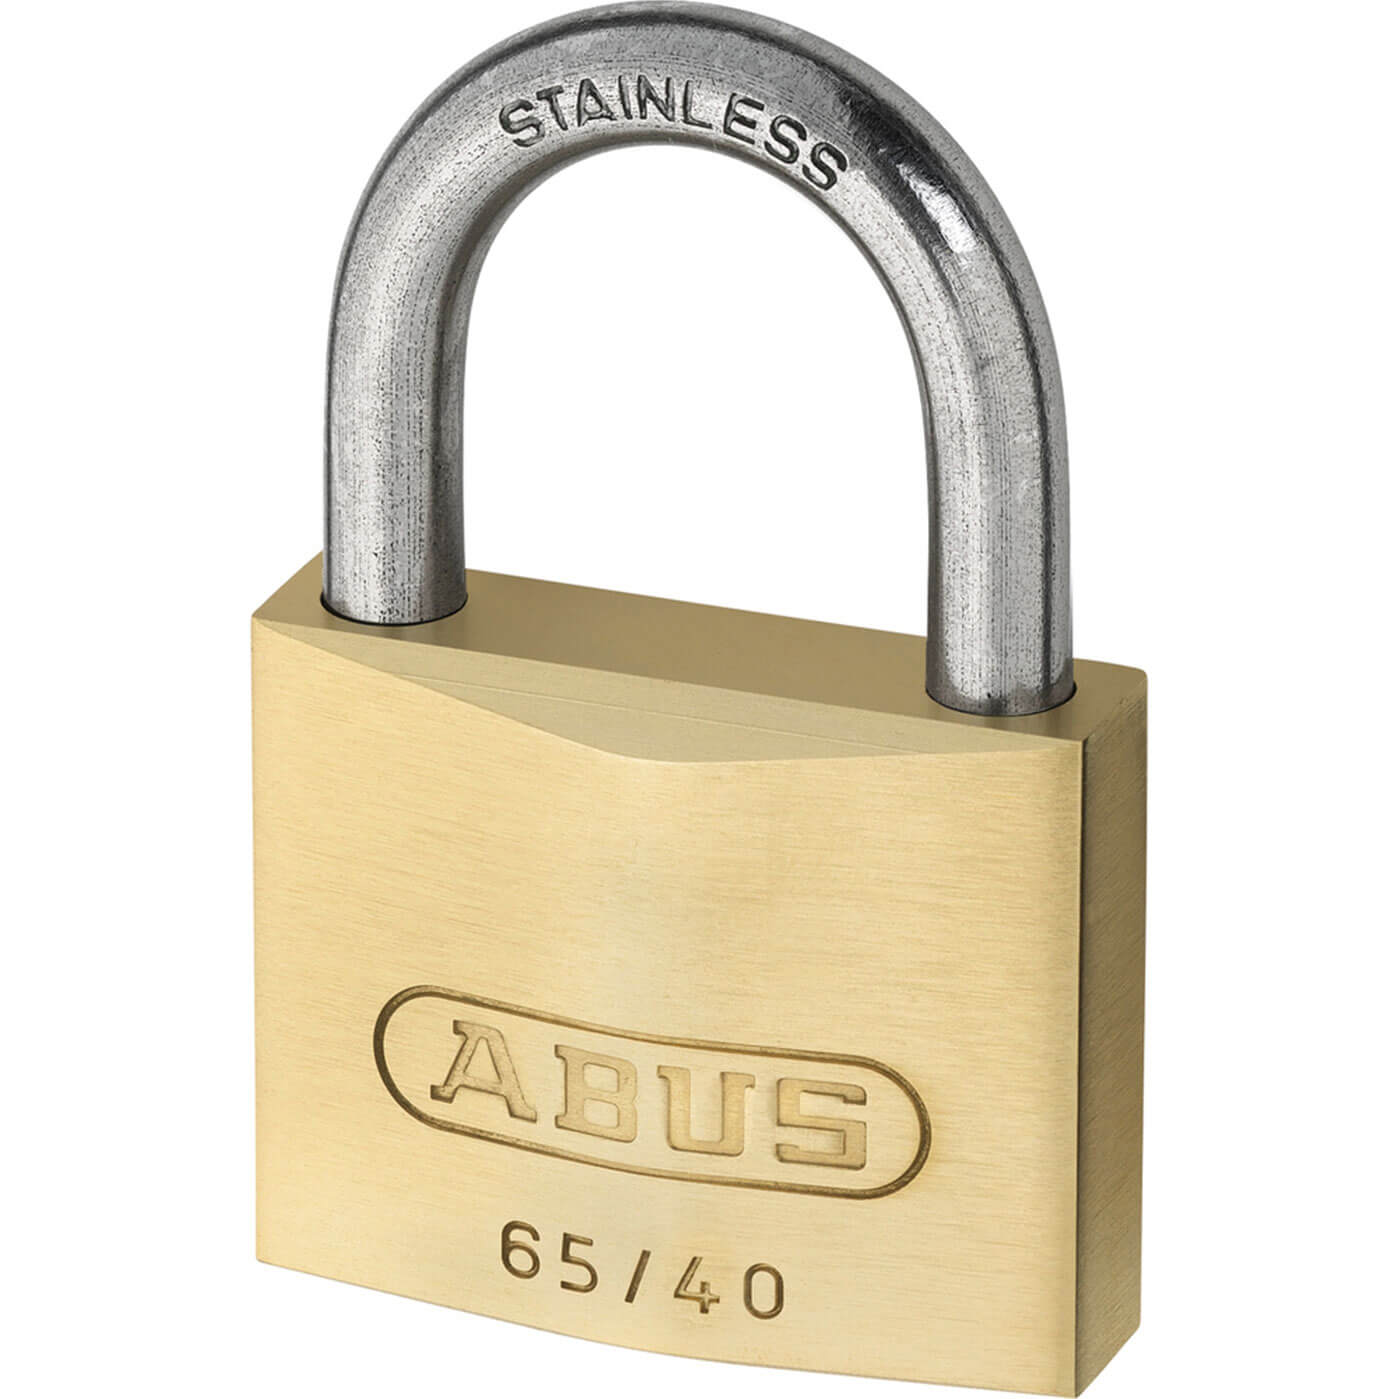 Image of Abus 65 Series Compact Brass Padlock Keyed Alike 40mm Standard 6404